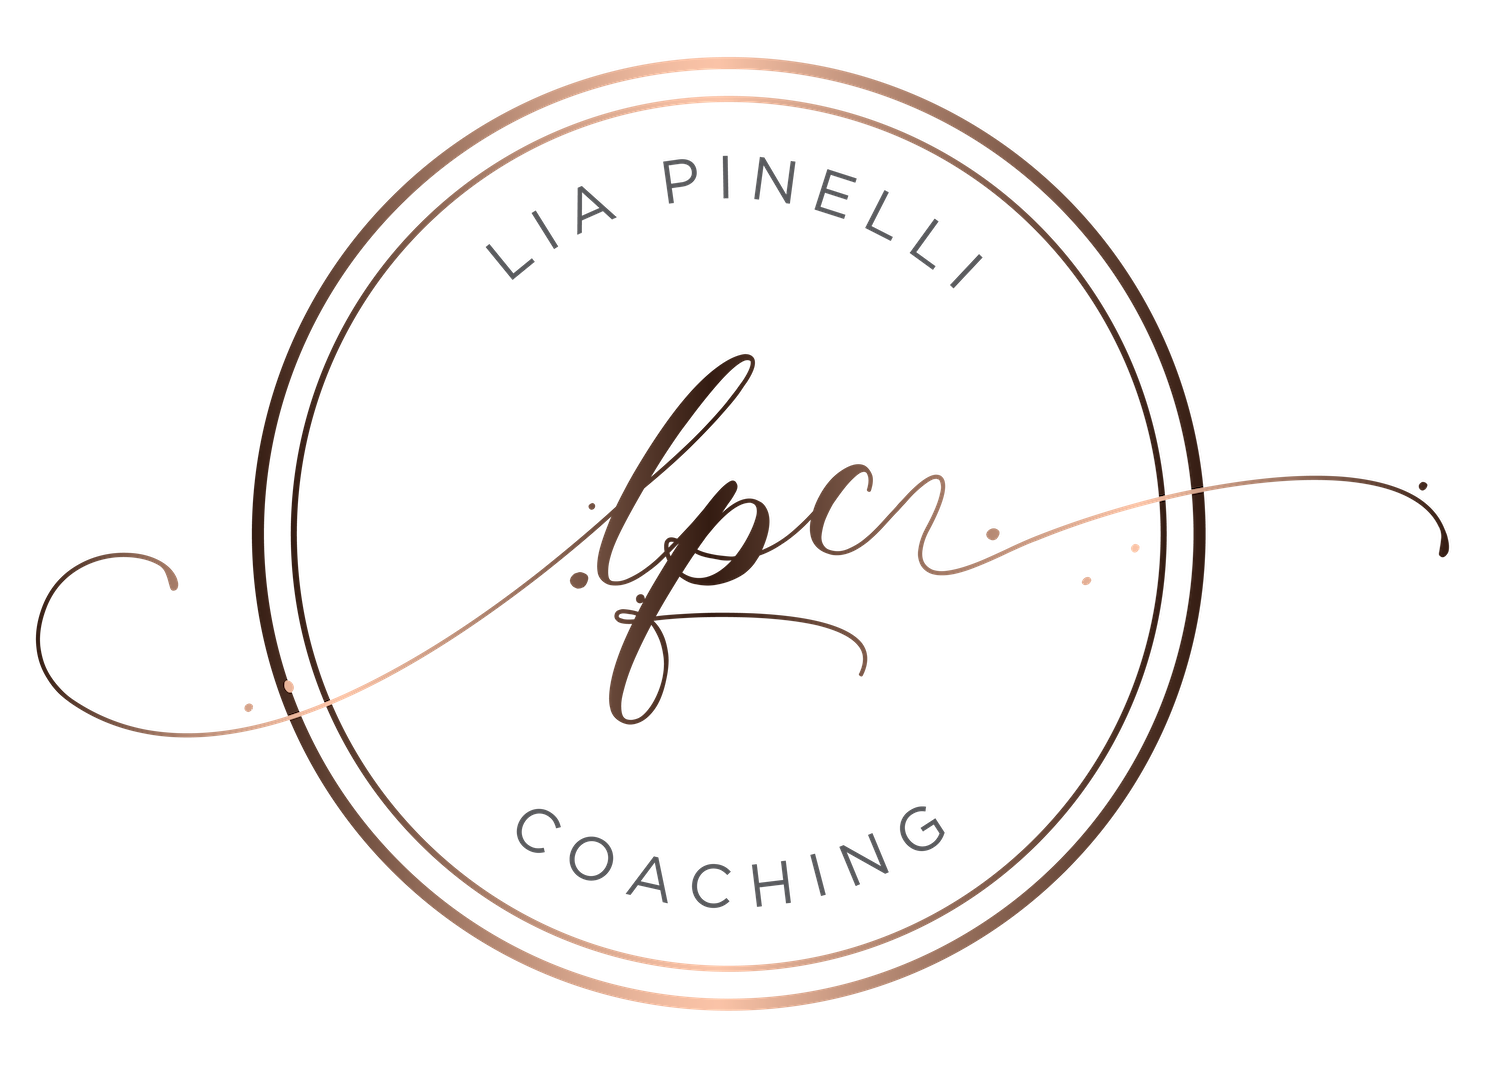 Lia Pinelli Coaching